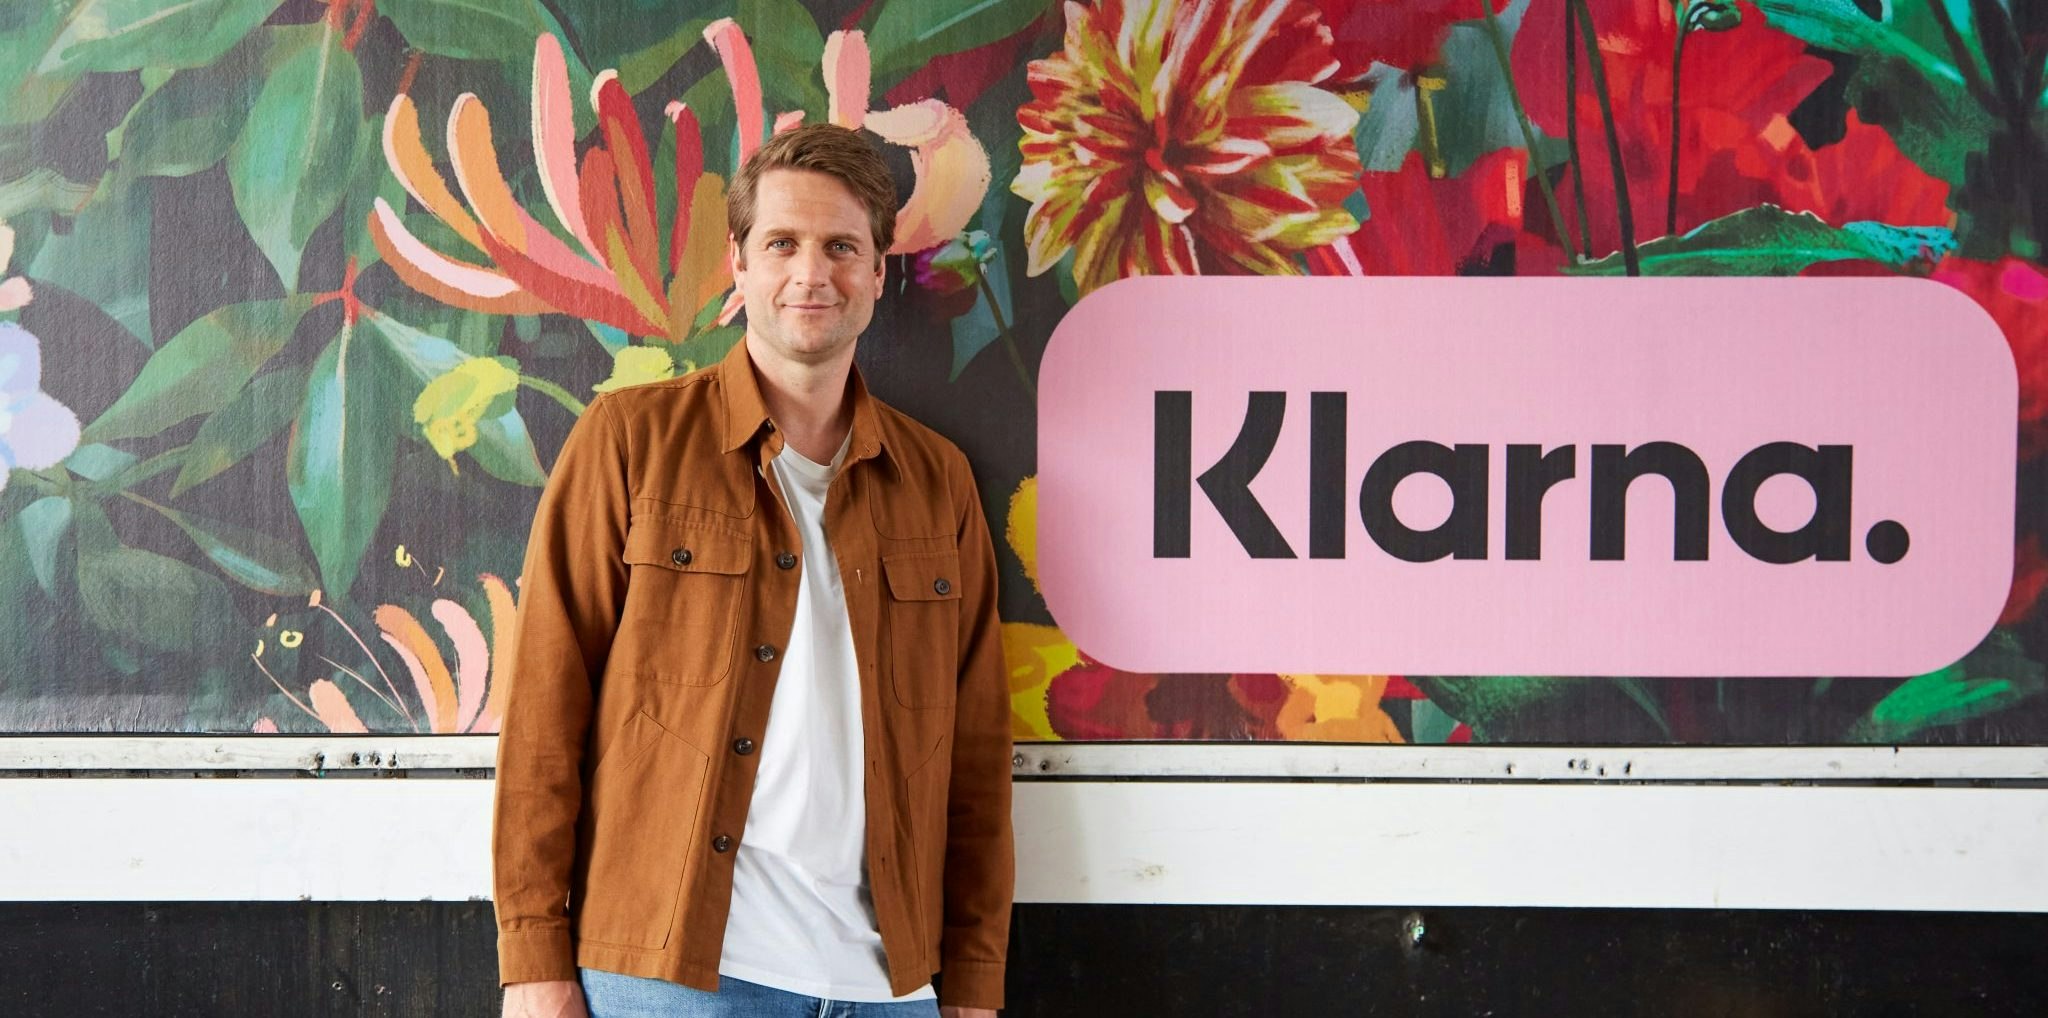 An image of Sebastian Siemiatkowski, CEO of Klarna, standing next to a Klarna sign.